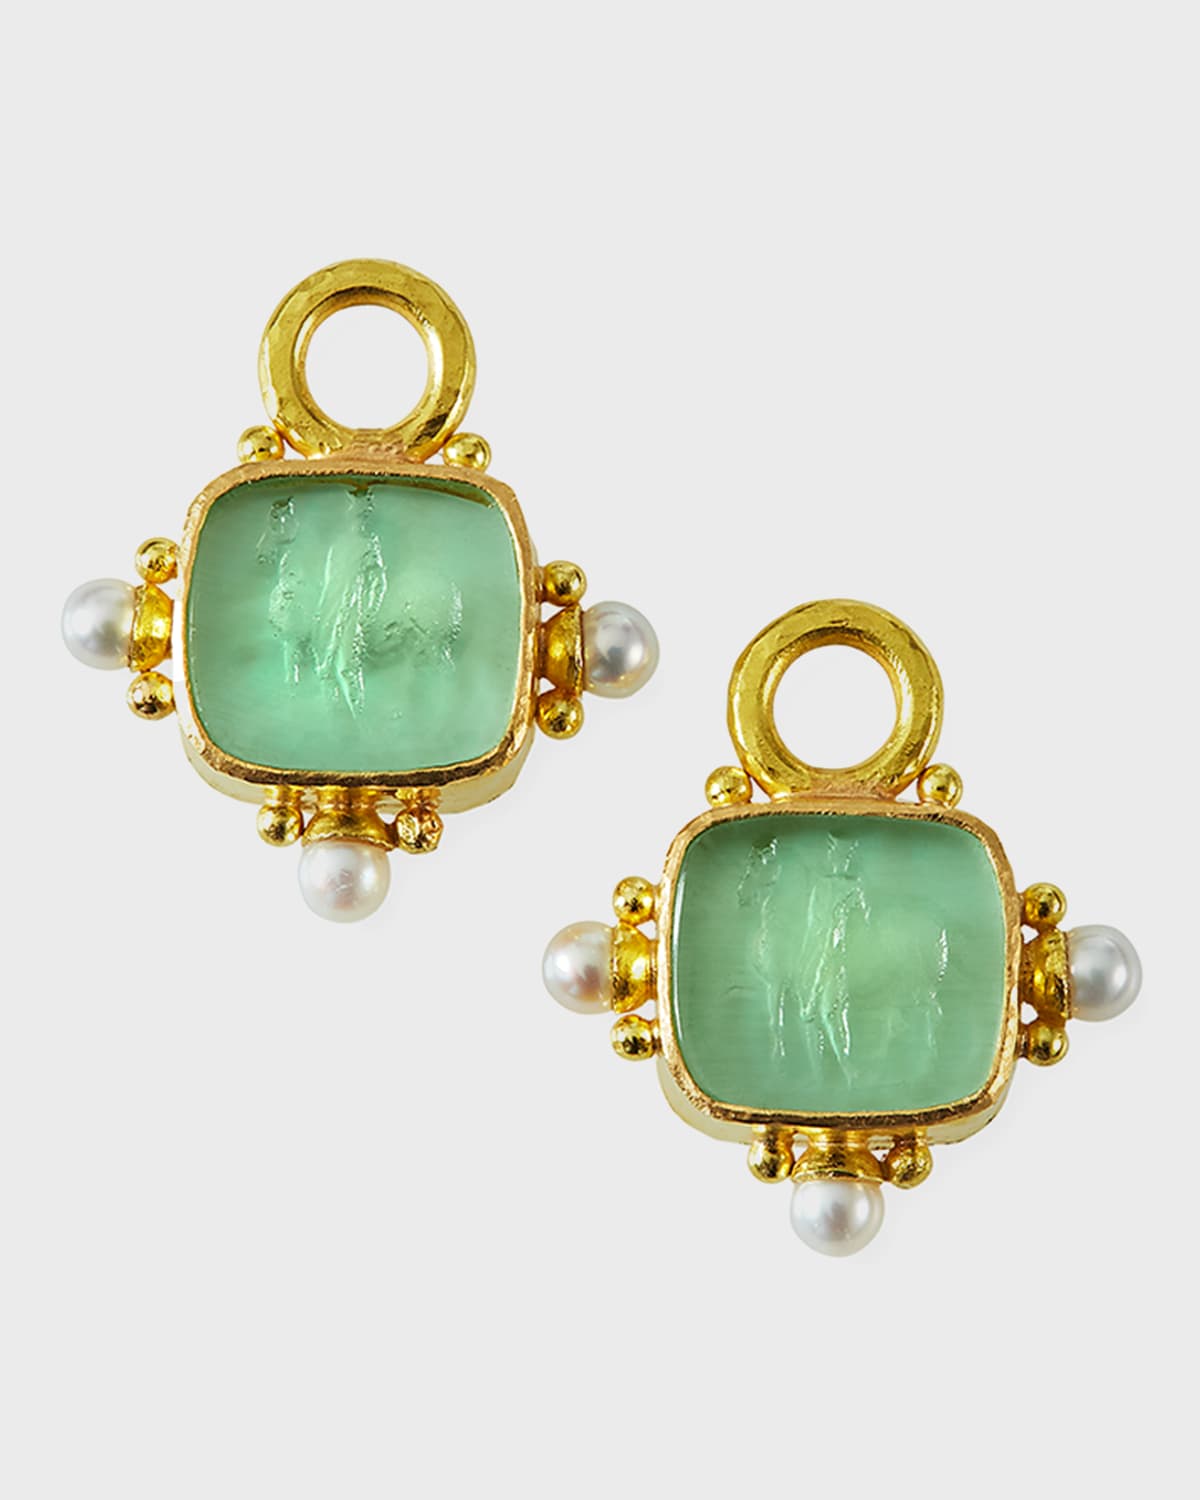 19k Venetian Glass and Pearl Earring Pendants